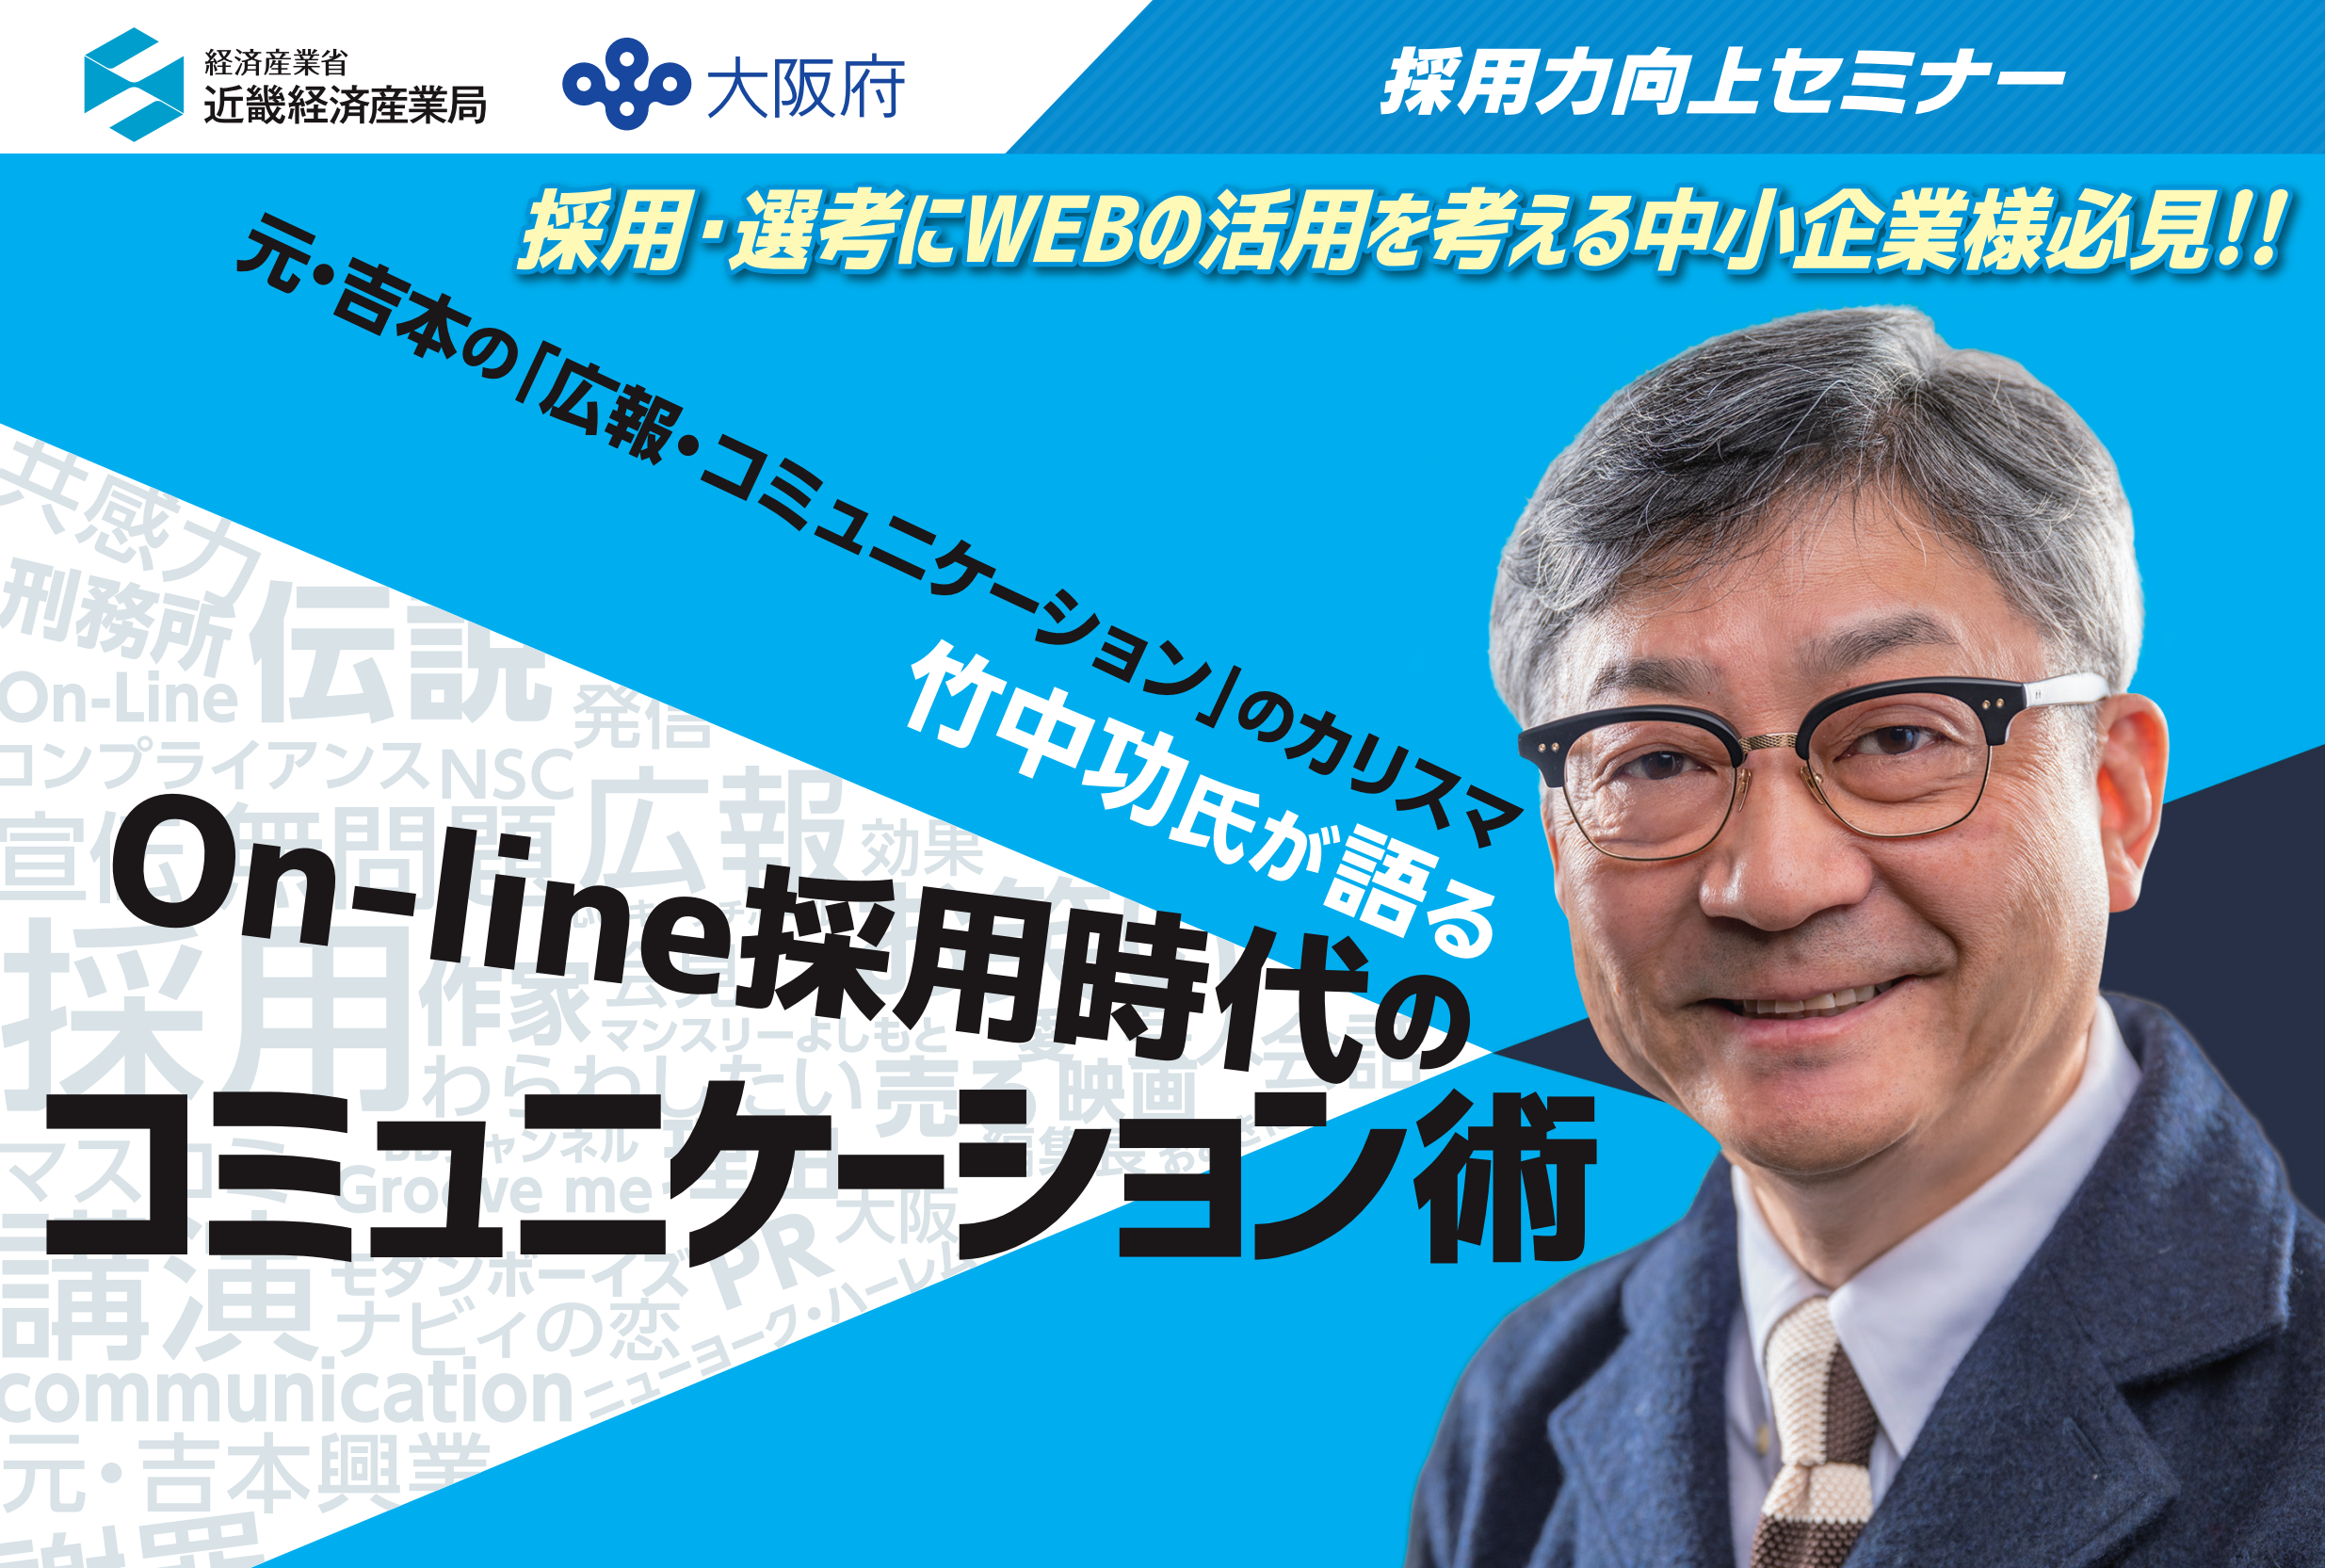 On Line採用時代のコミュニケーション術 Osakaしごとフィールド